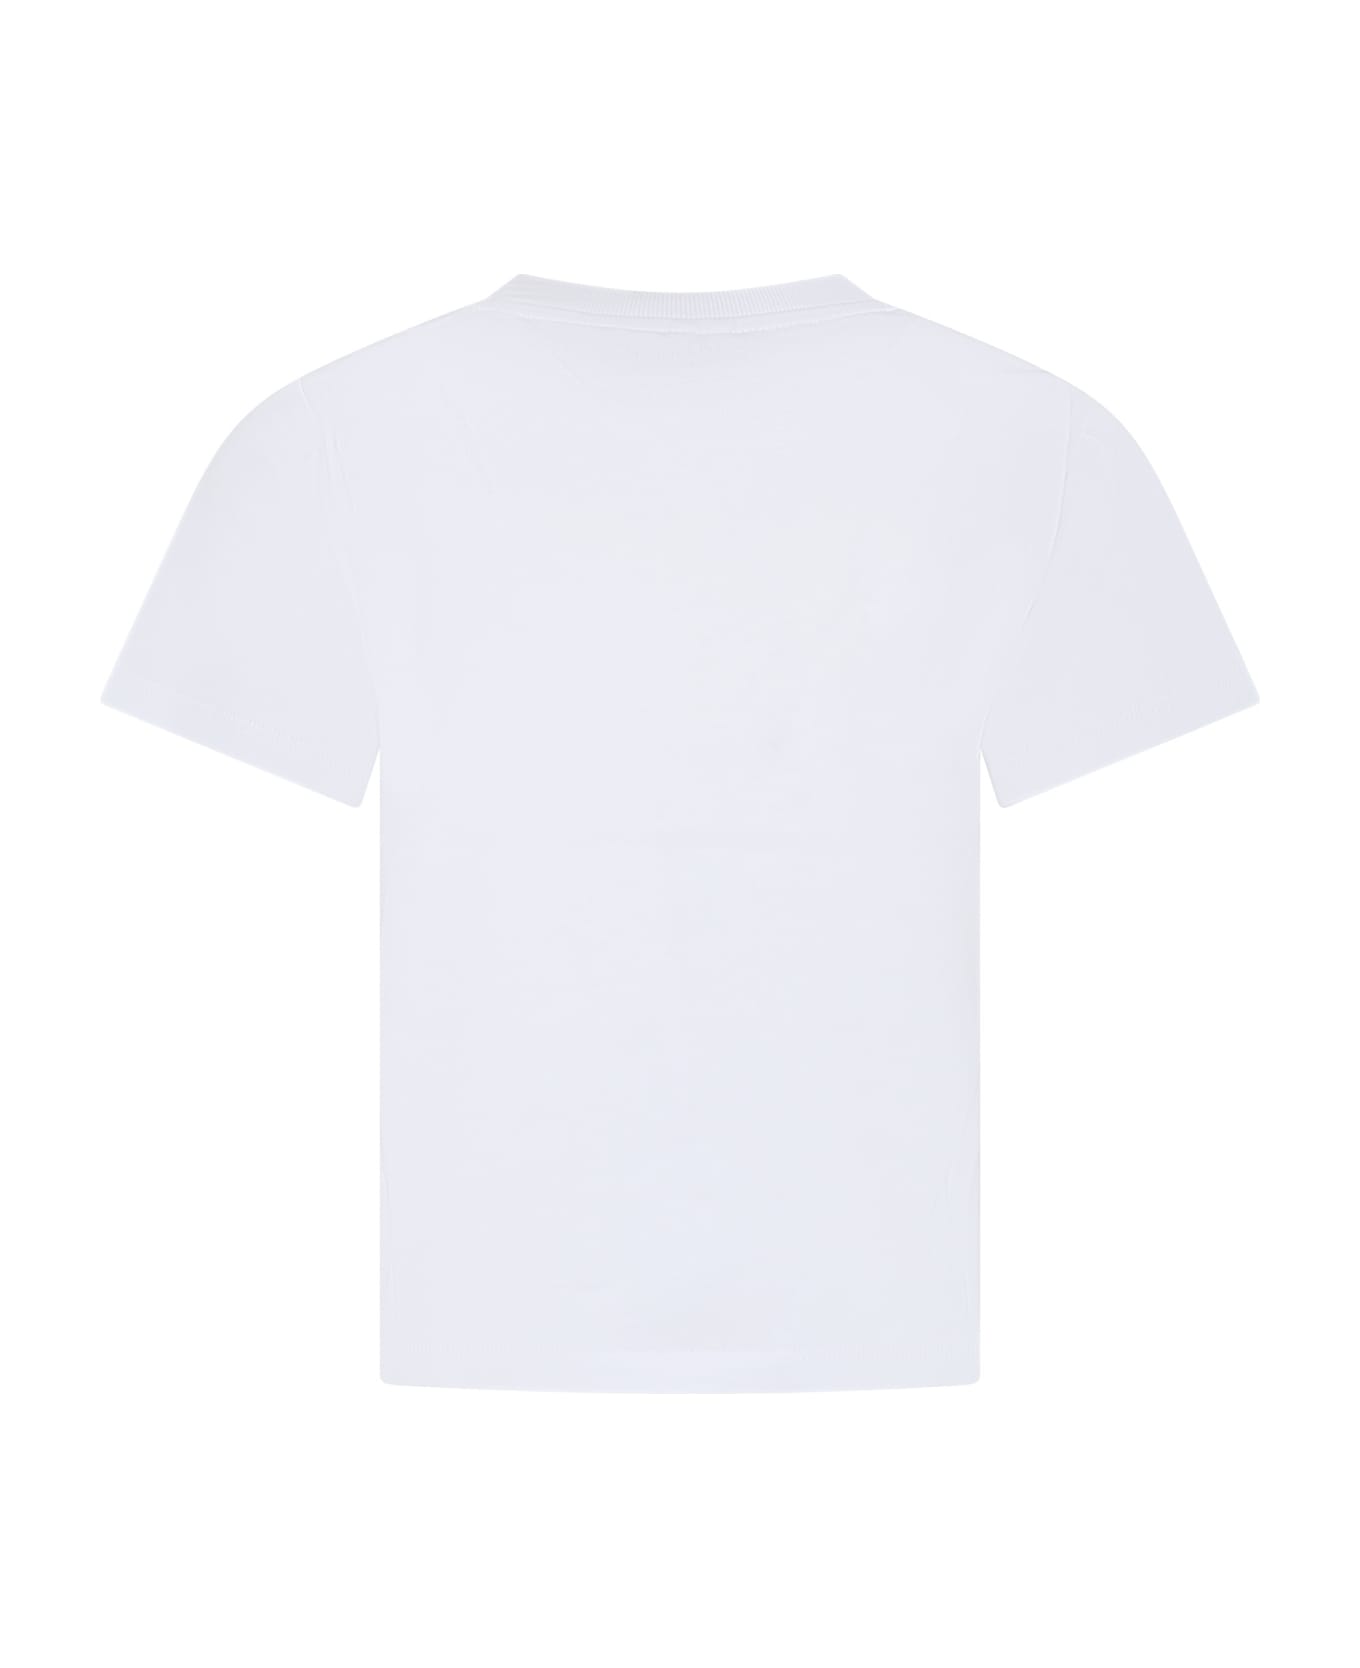 Stella McCartney Kids White T-shirt For Boy With Print - White